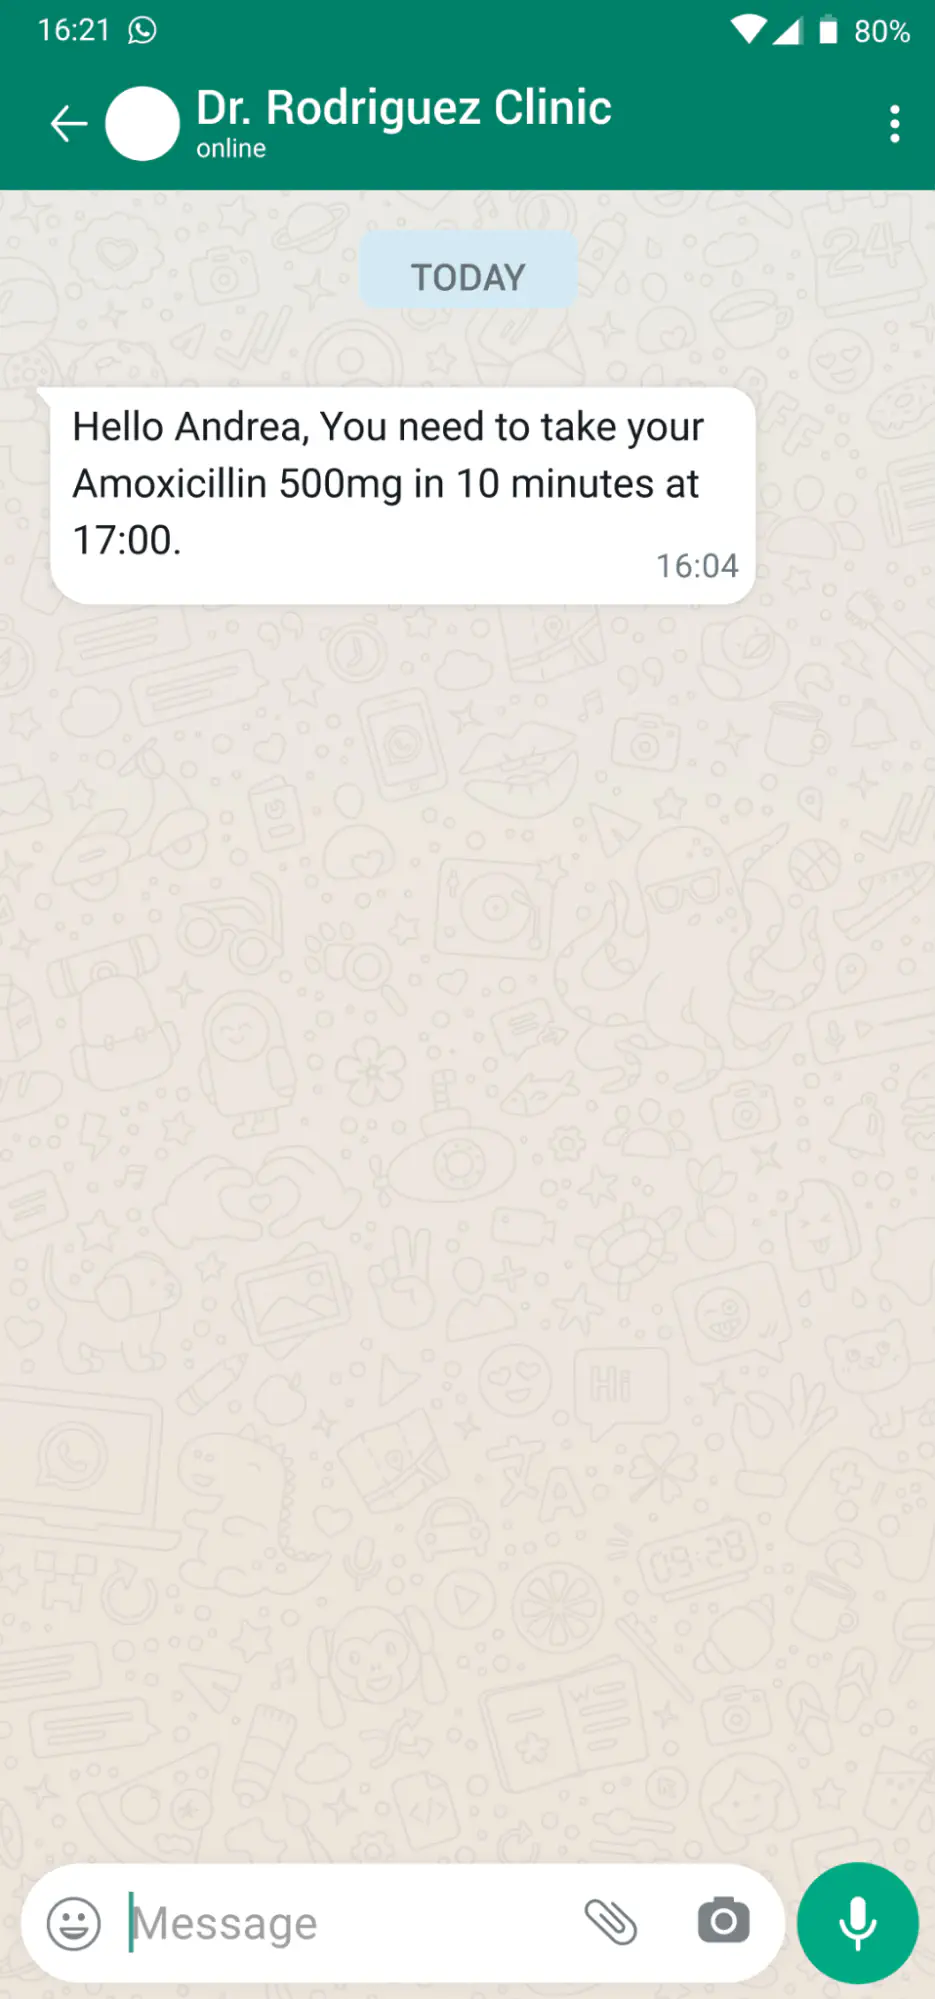 WhatsApp chatbot sending medication reminders.